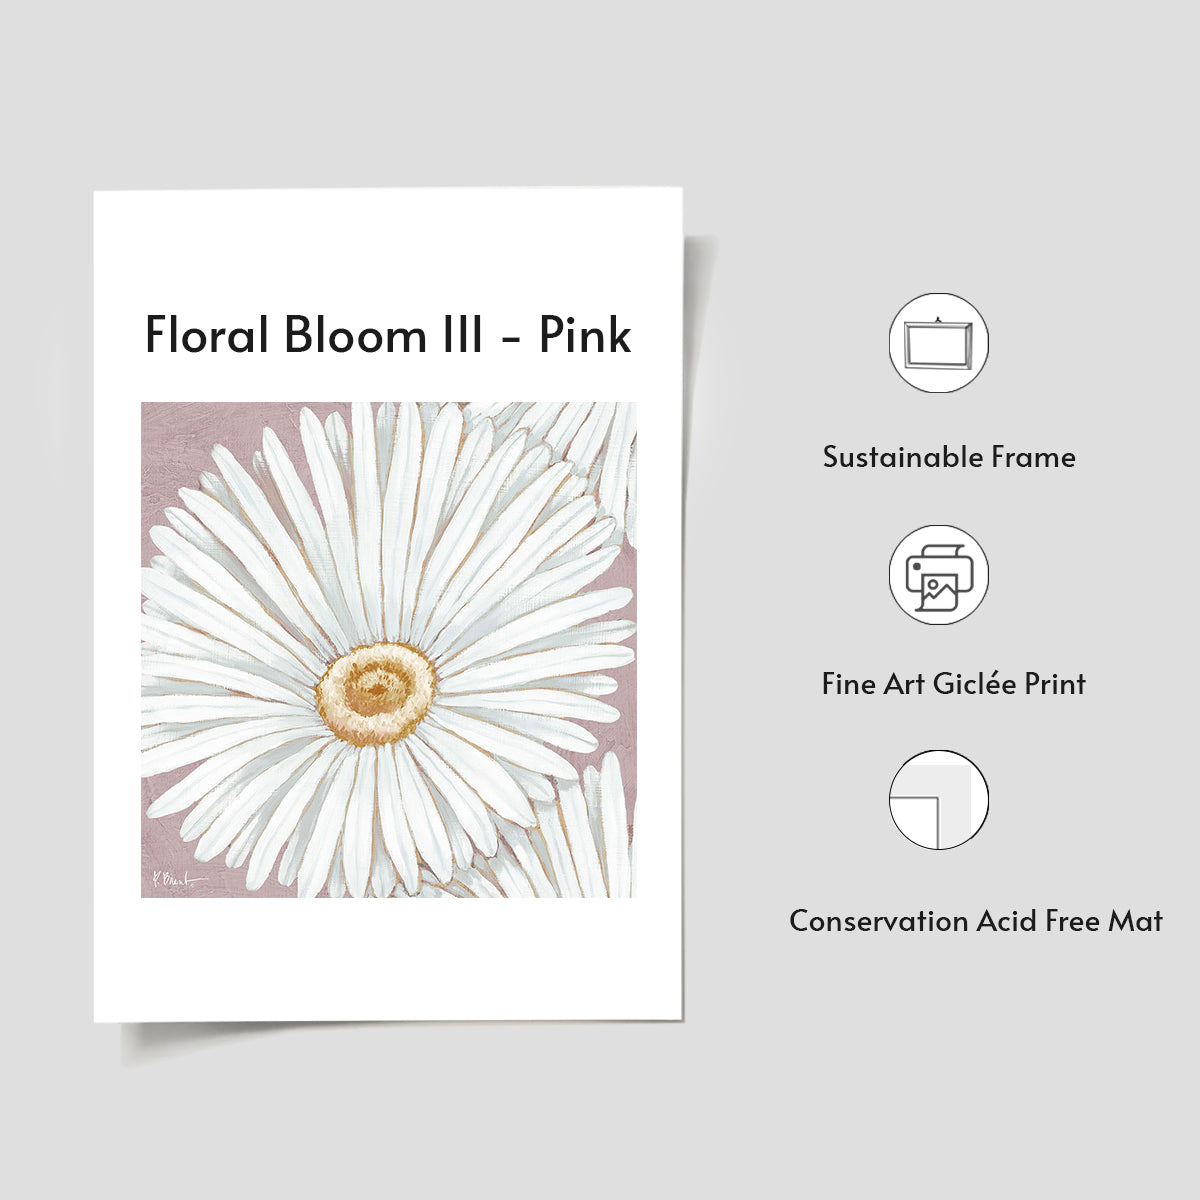 Floraison florale III - Rose 